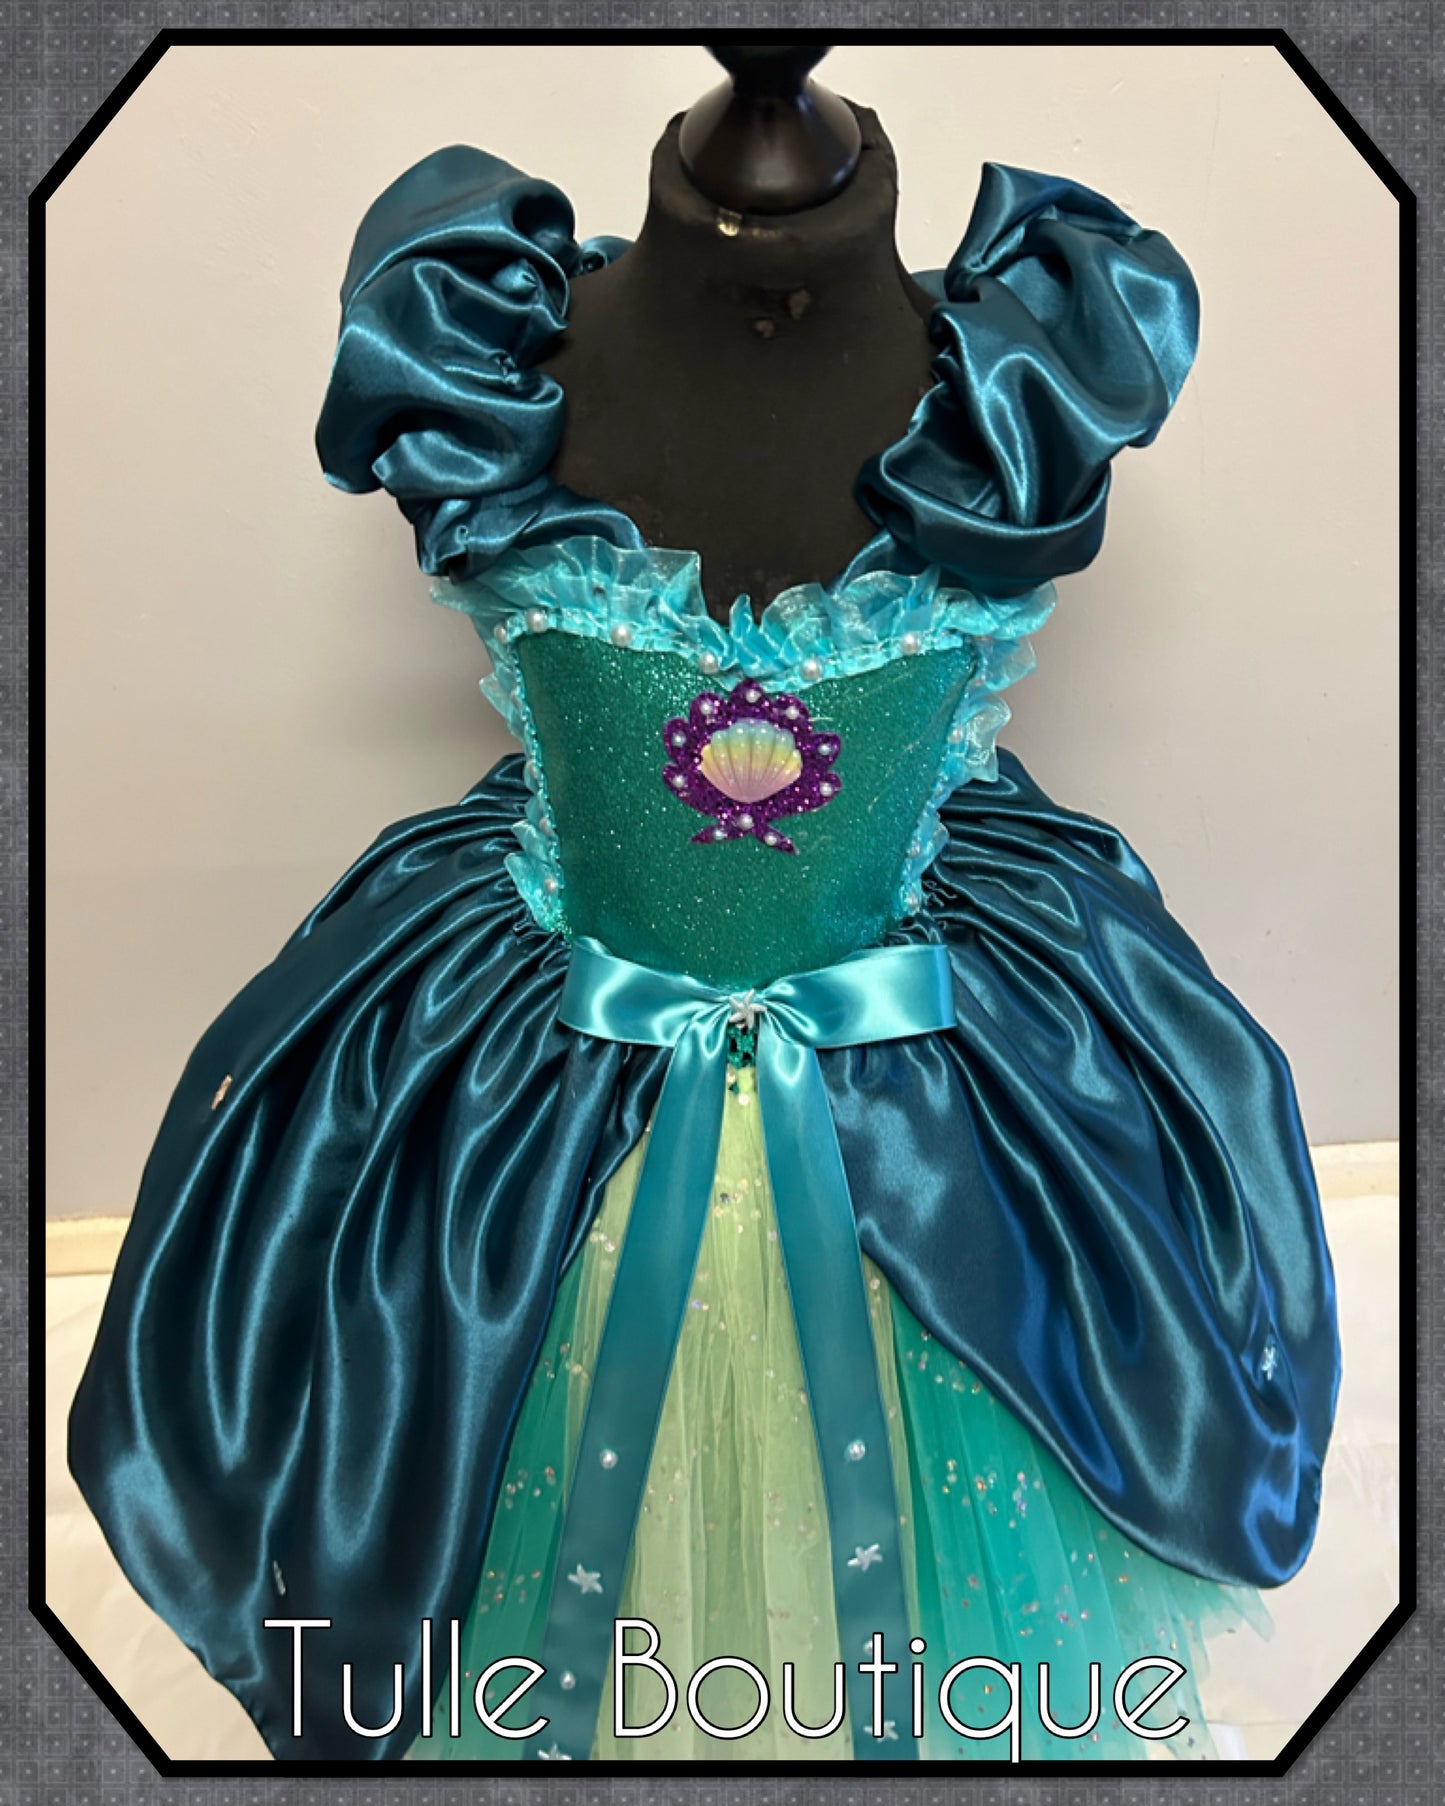 Mermaid Princess Ariel full length ballgown tutu dress